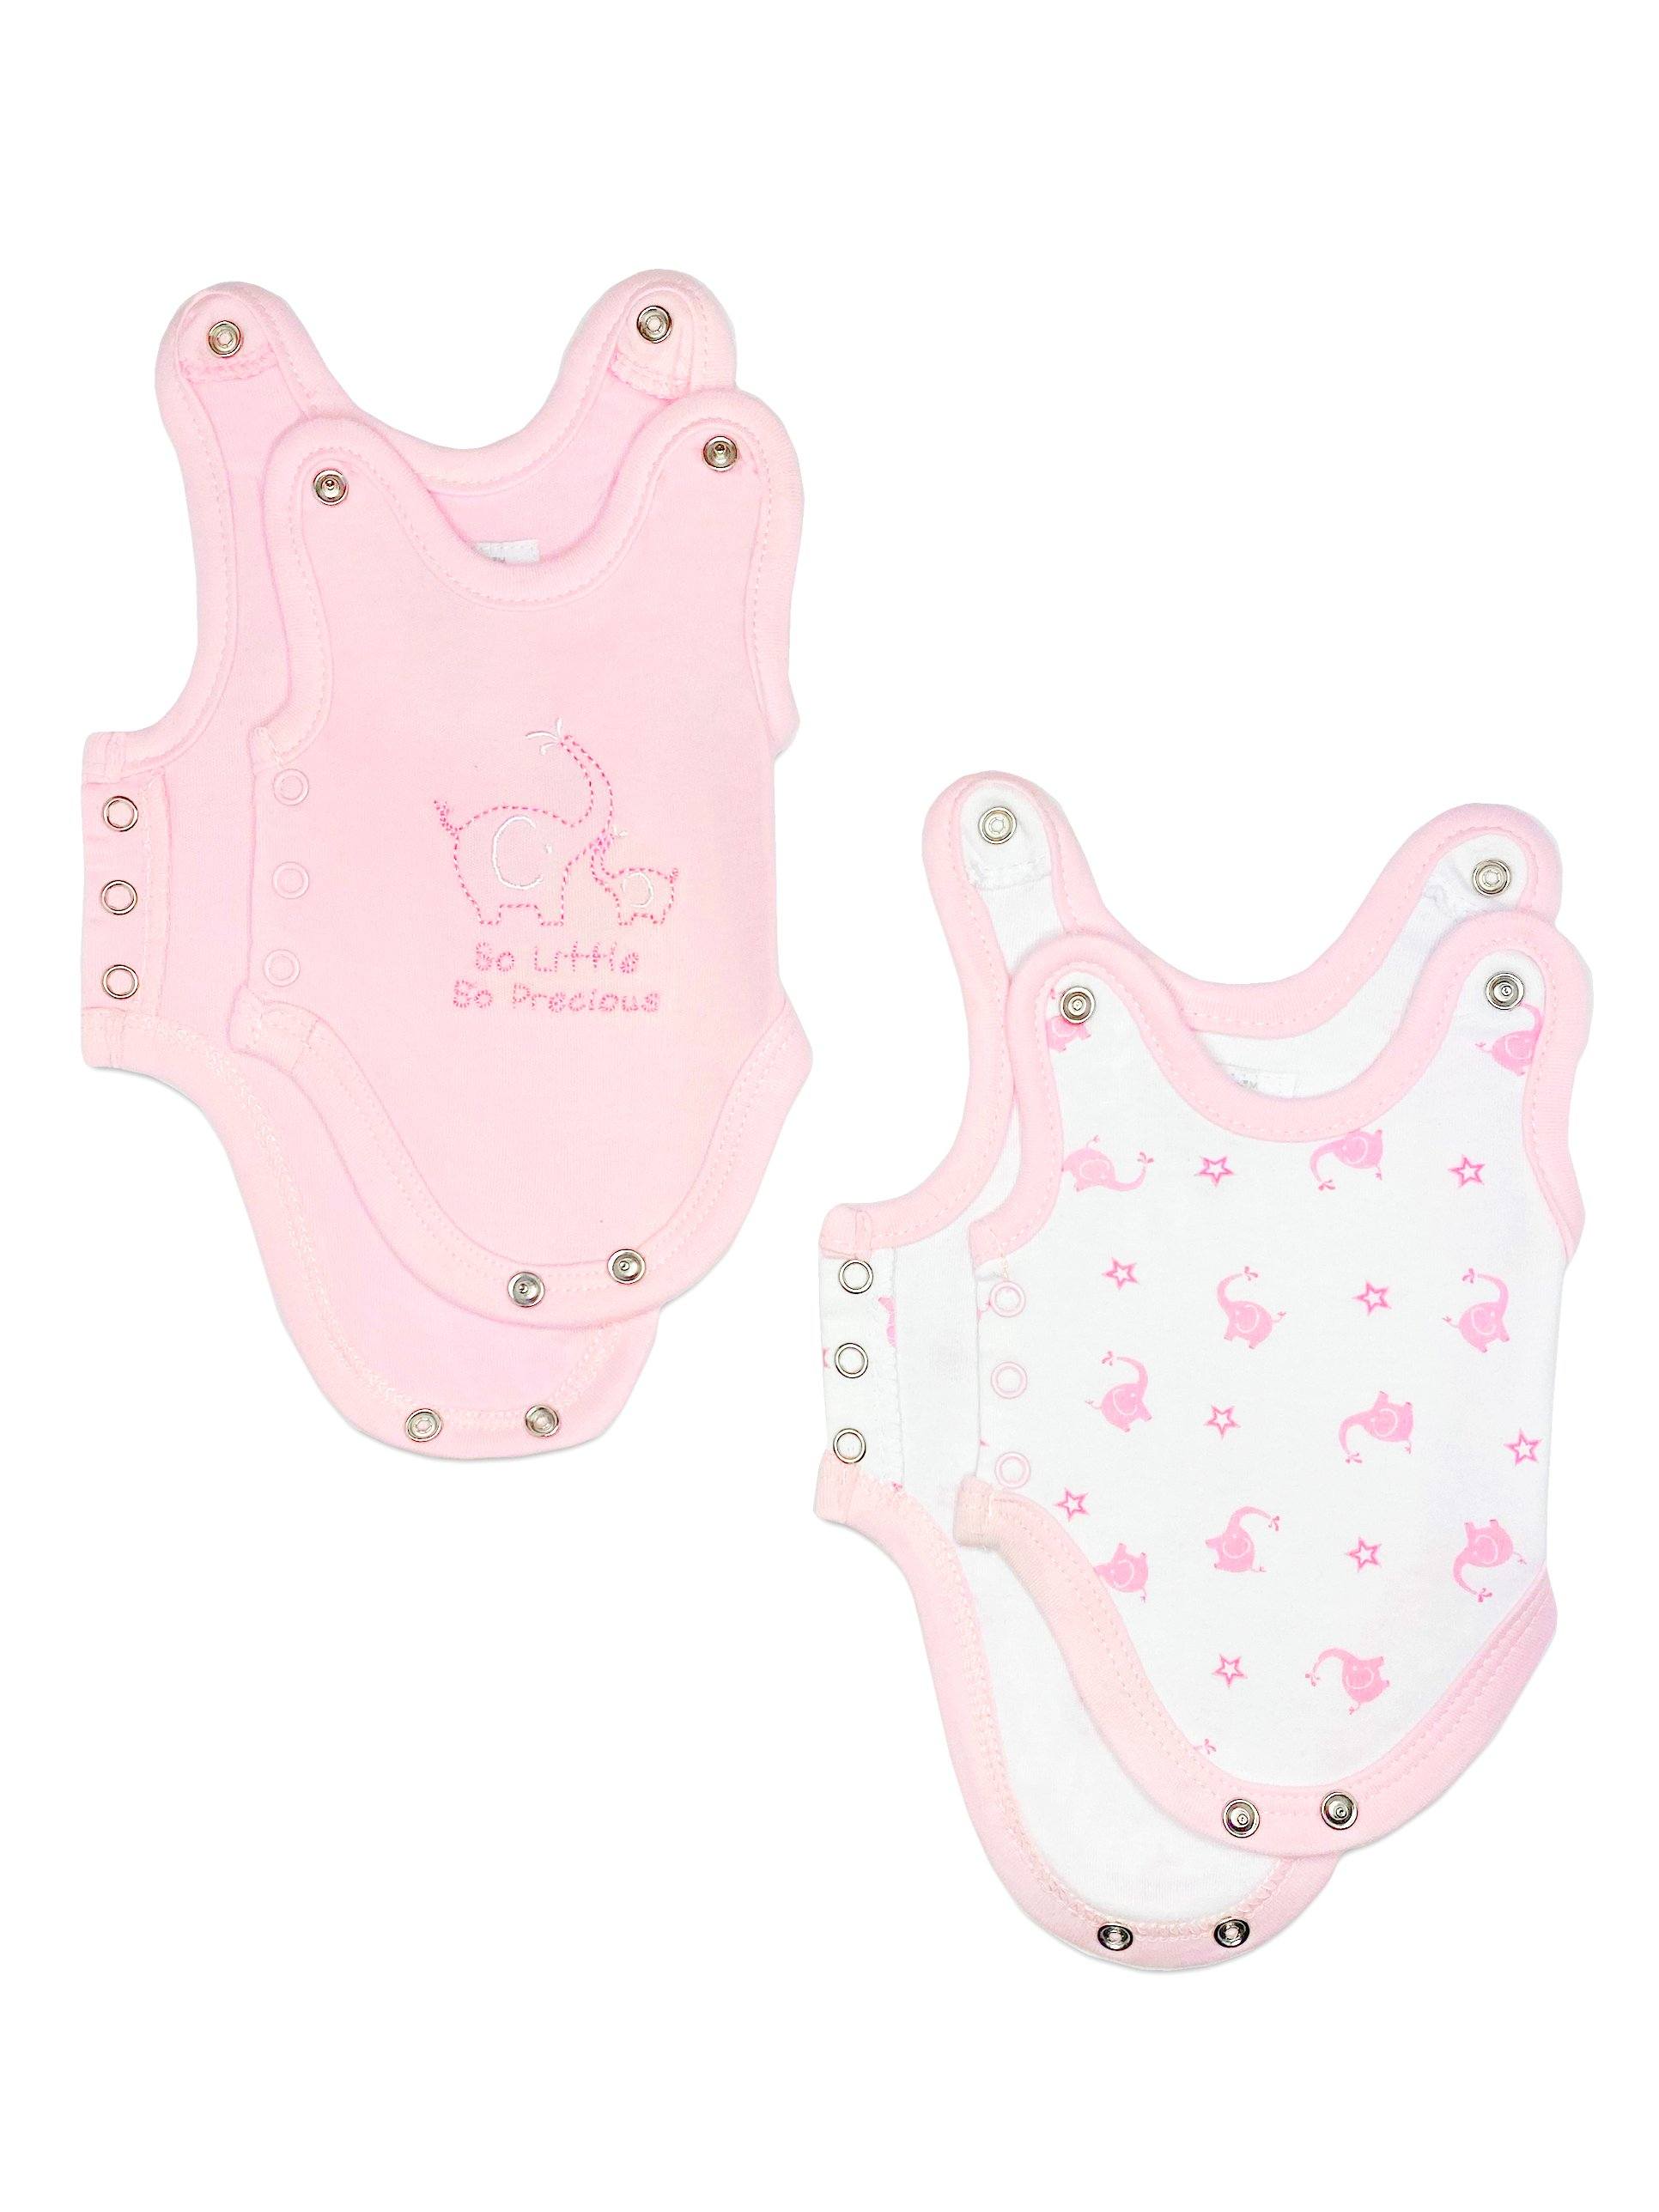 2 Pack Incubator Vests - Pink Elephant & Star Bodysuit / Vest Tiny Chick 